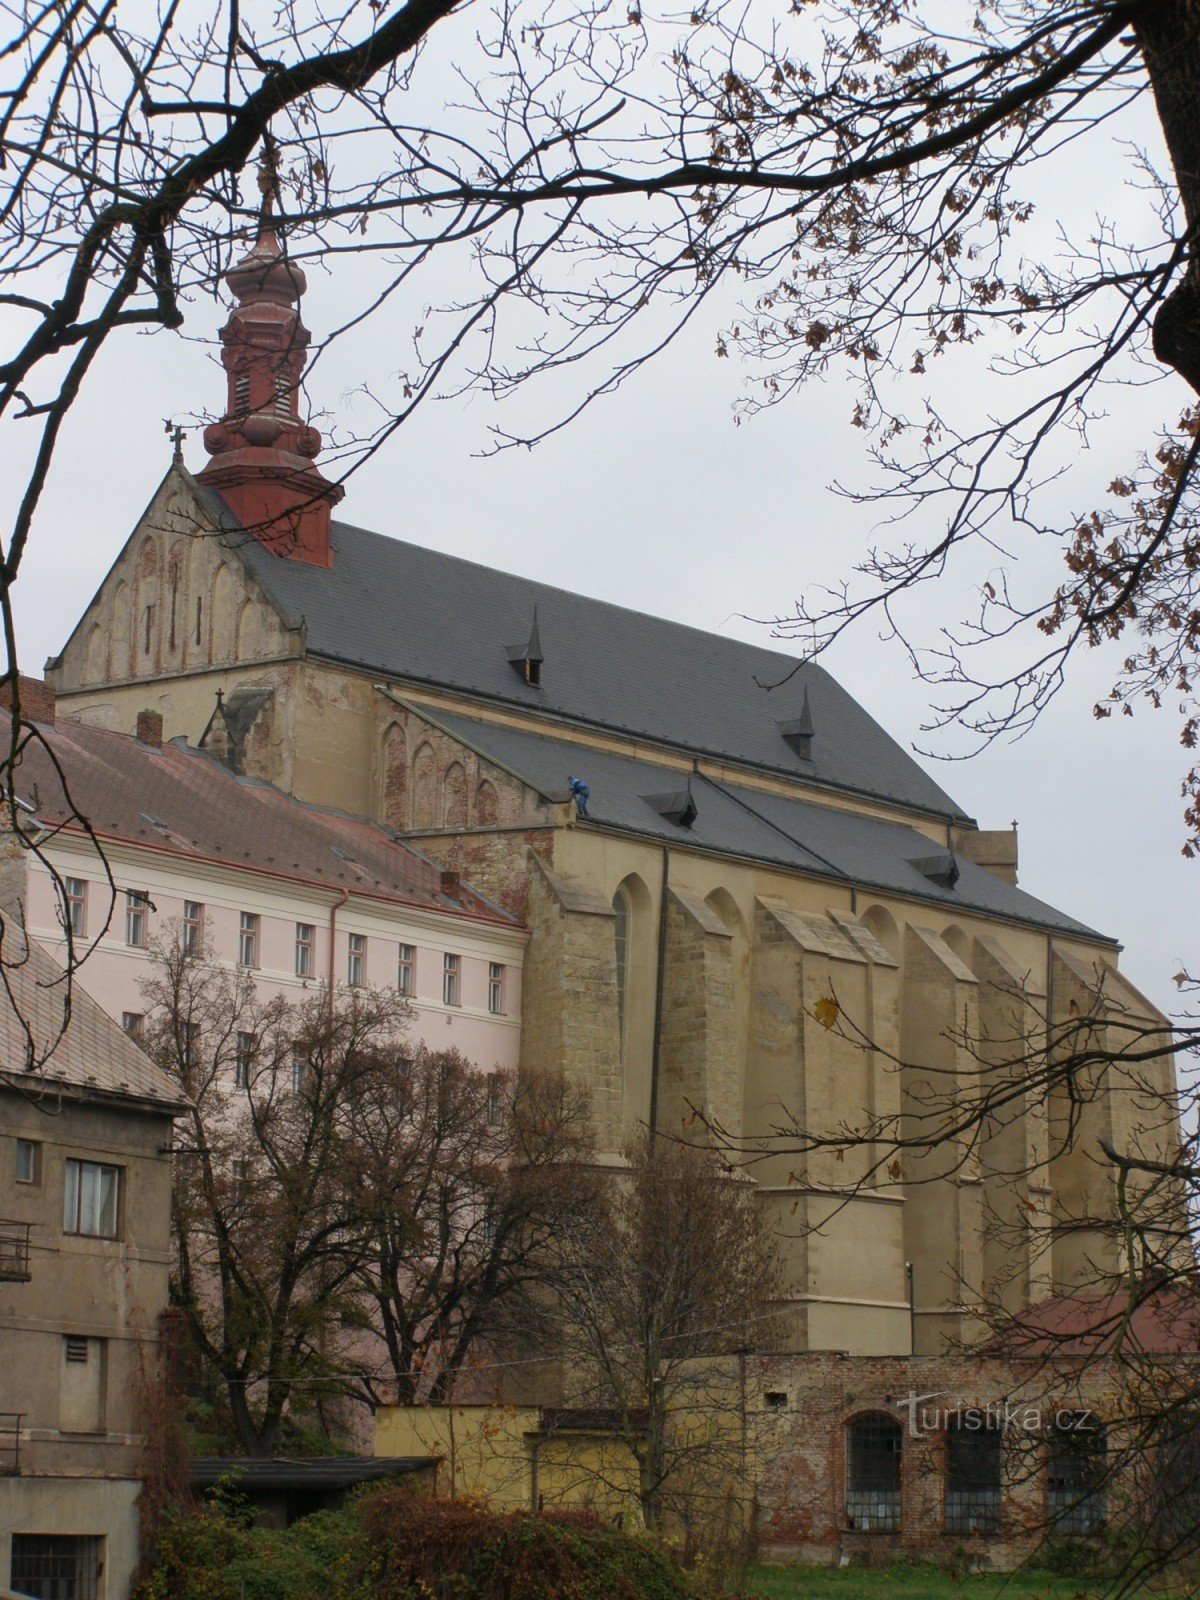 Jaroměř - Pyhän kirkko Nicholas